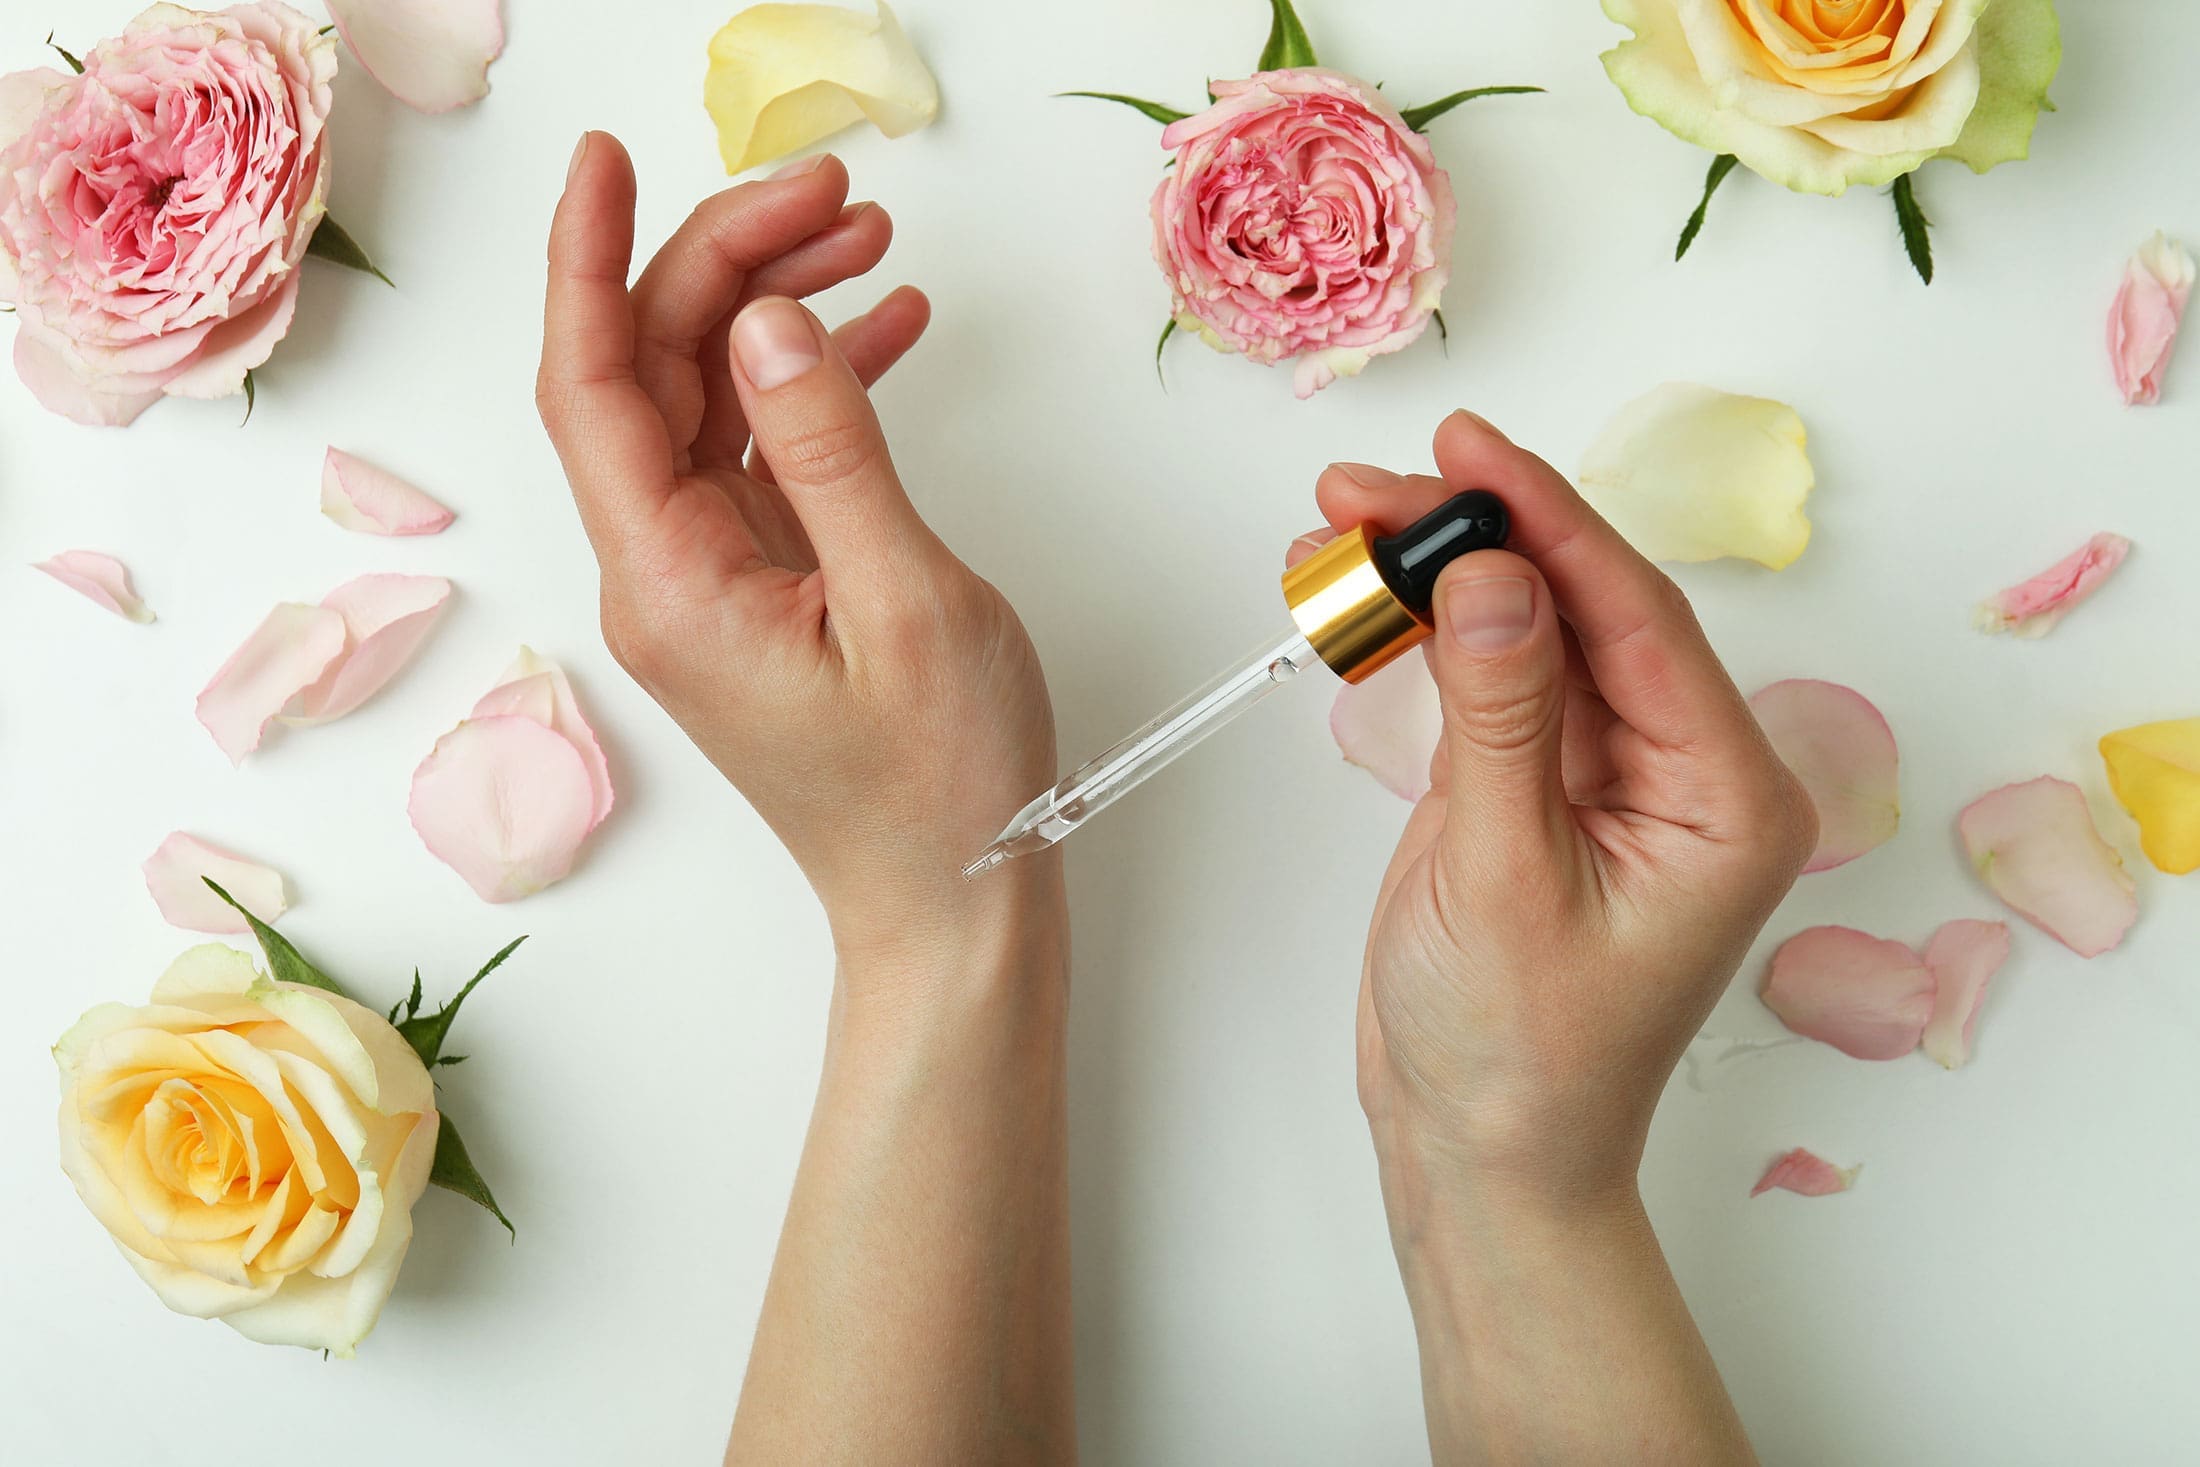 Hands around flowers using essential oils naturally